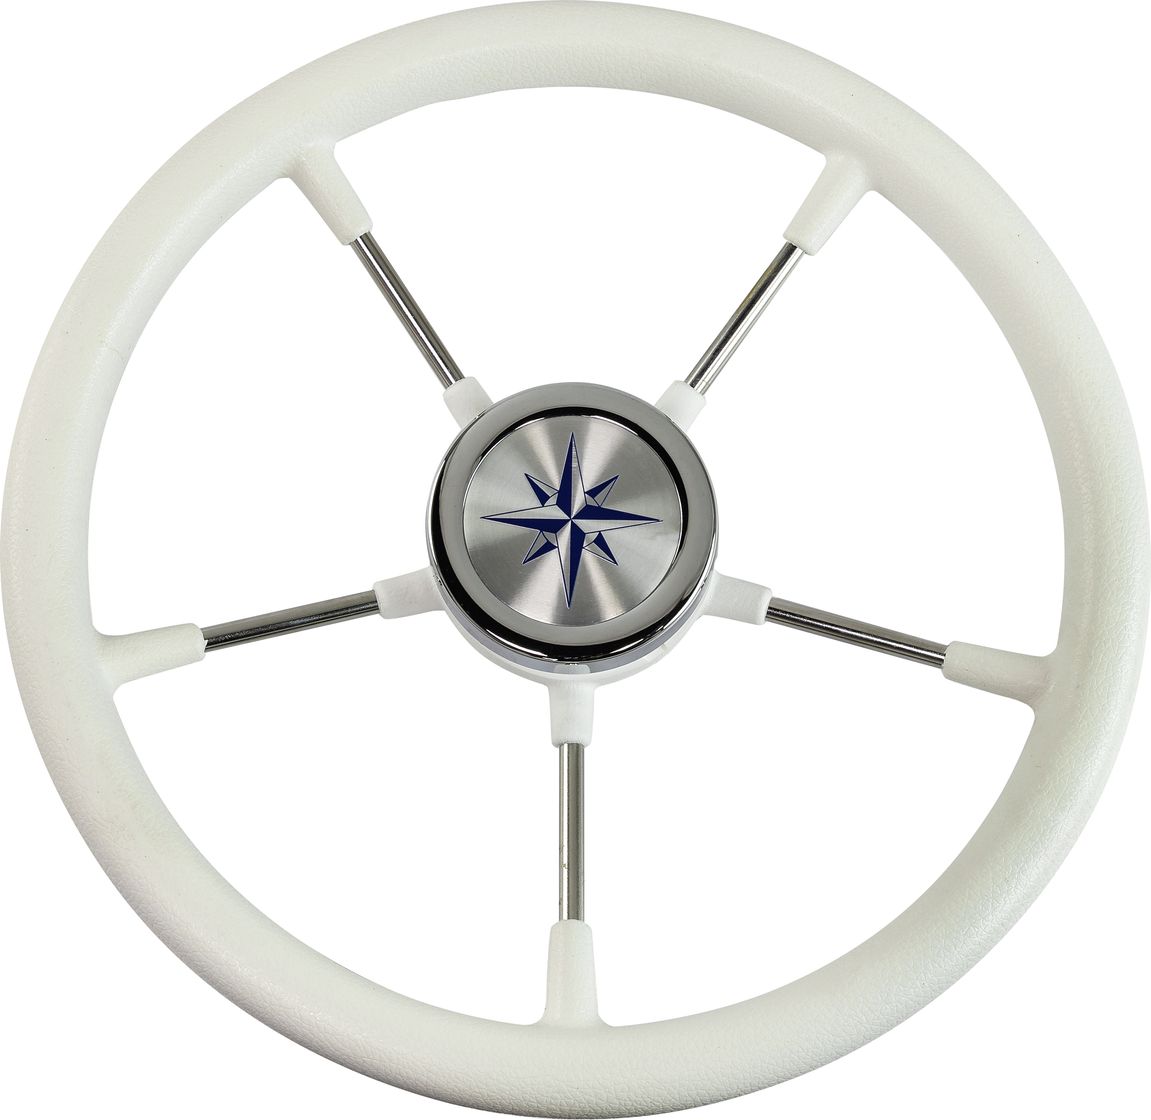 Рулевое колесо RIVA RSL обод белый, спицы серебряные д. 360 мм VN735022-08 рулевое колесо matrix белый обод more 10016474